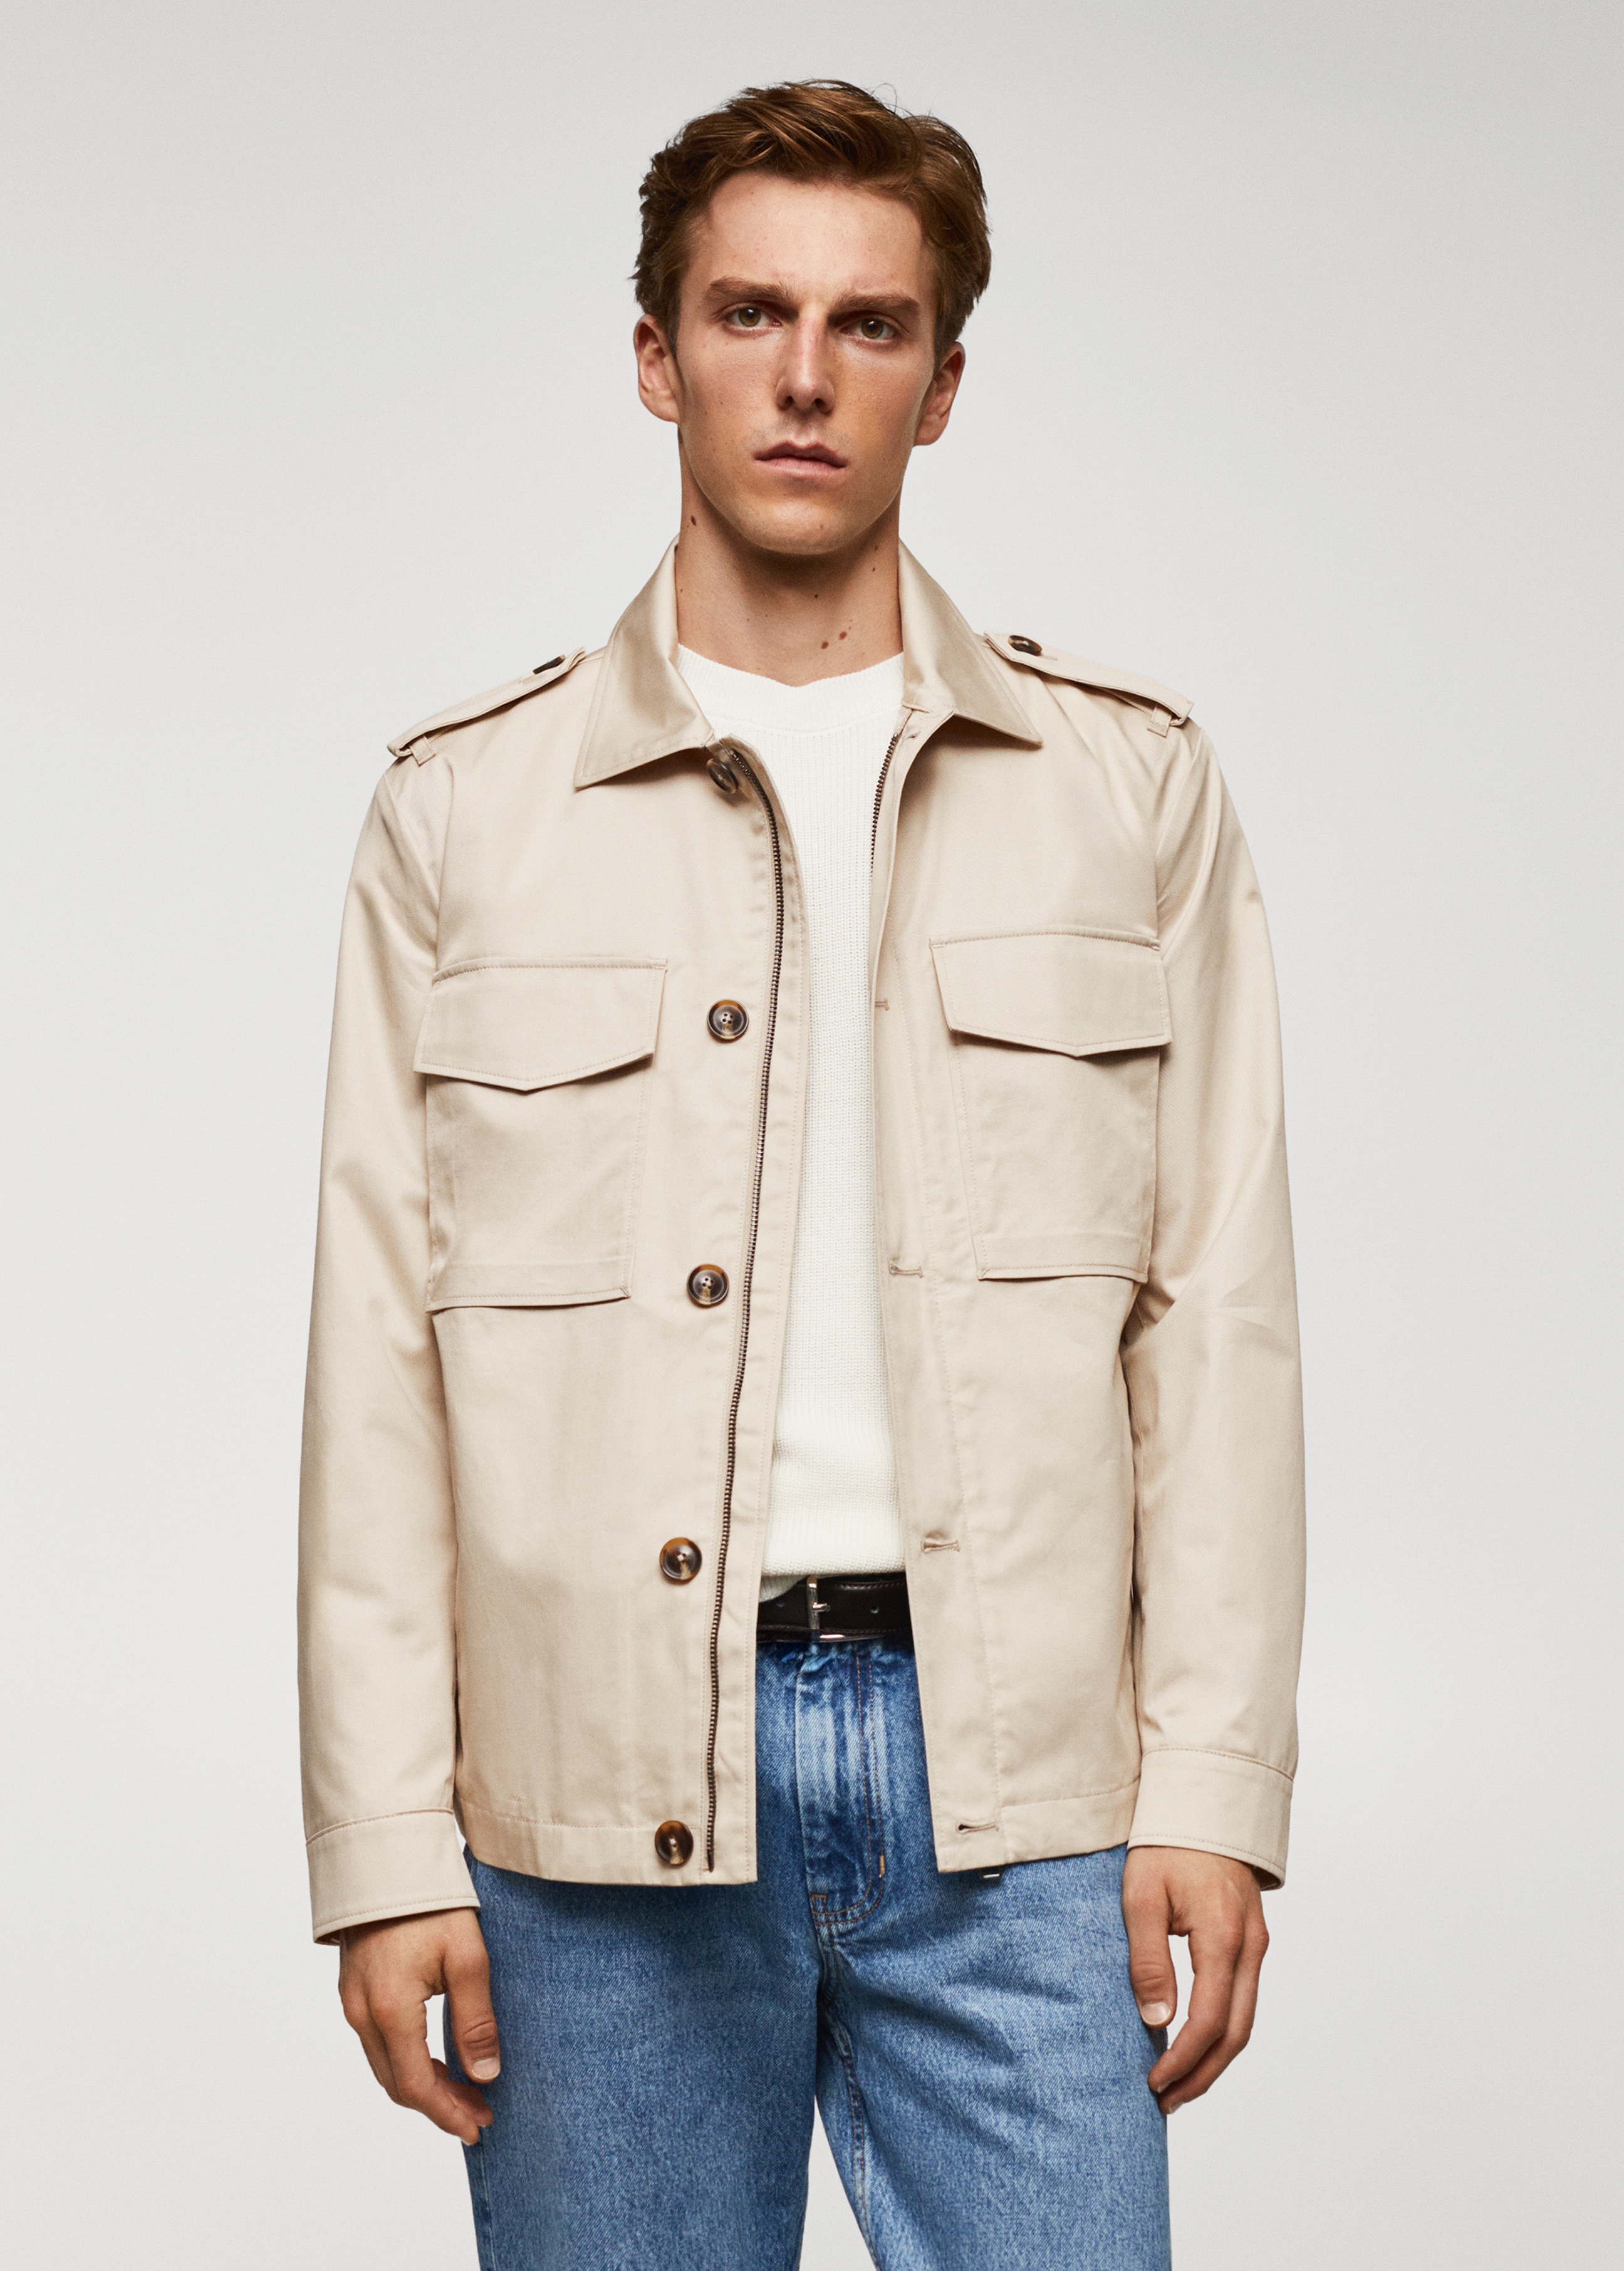 100% cotton jacket with pockets - Medium plane